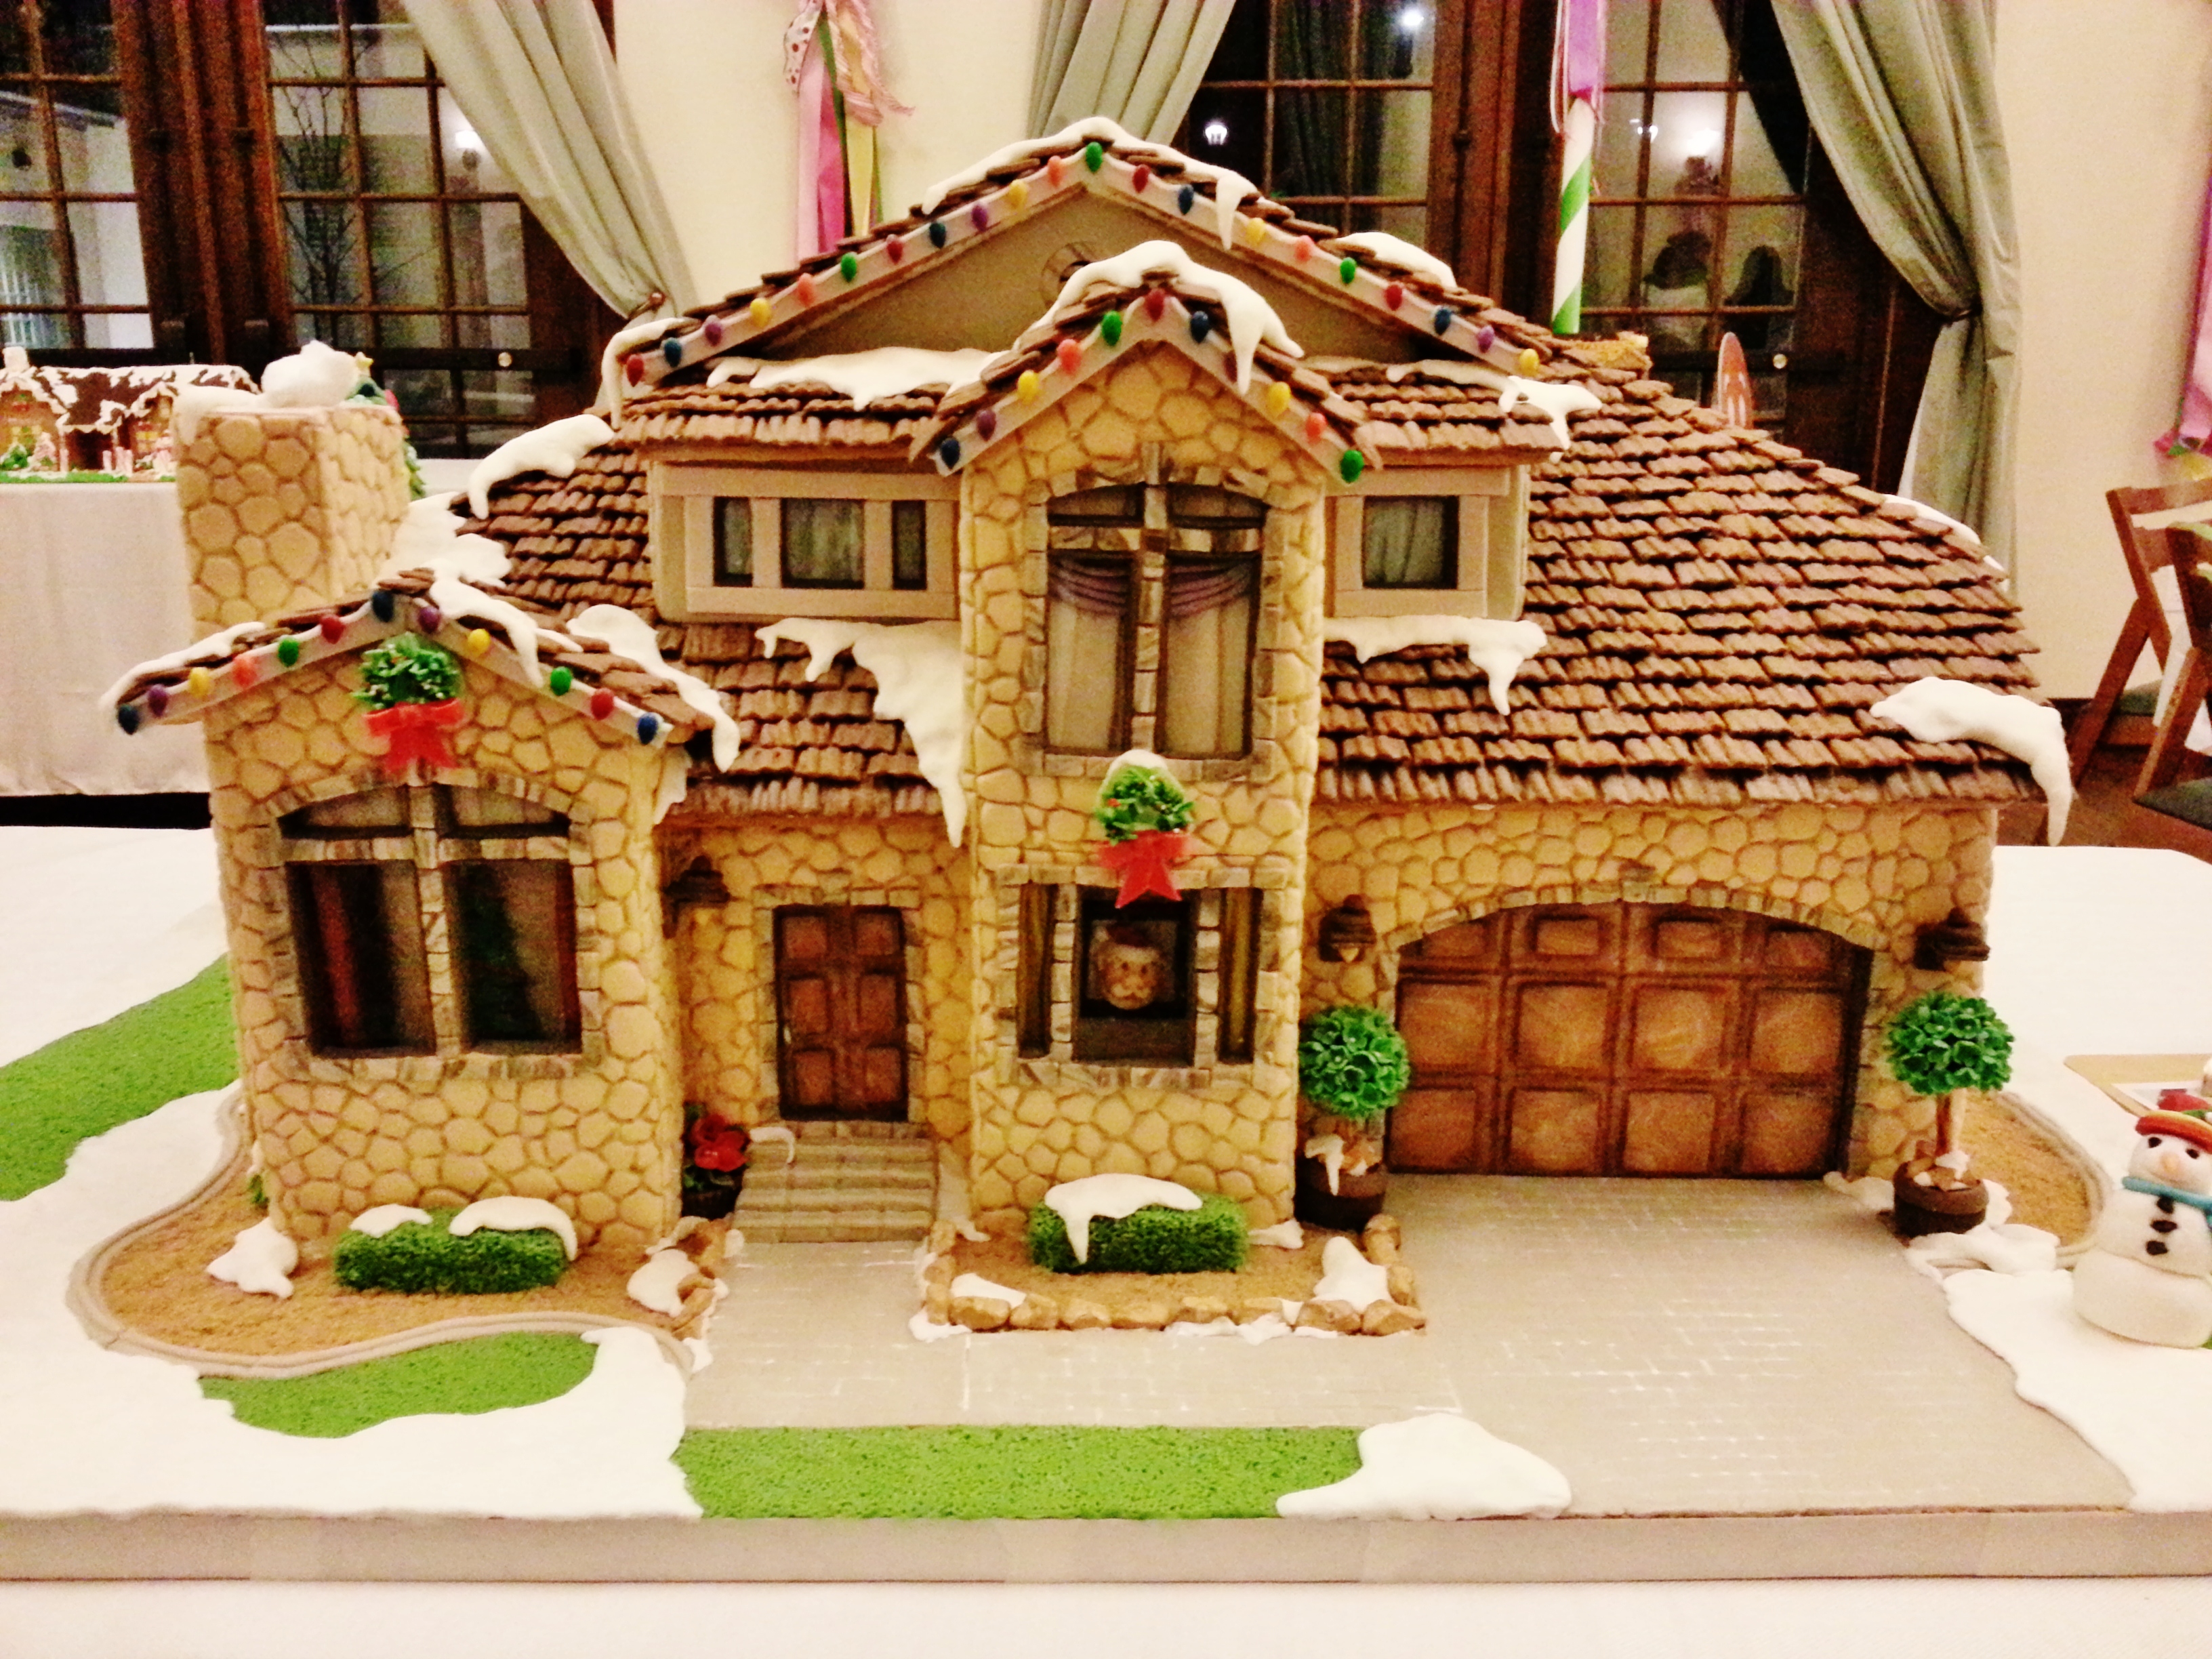 Gingerbread House Description